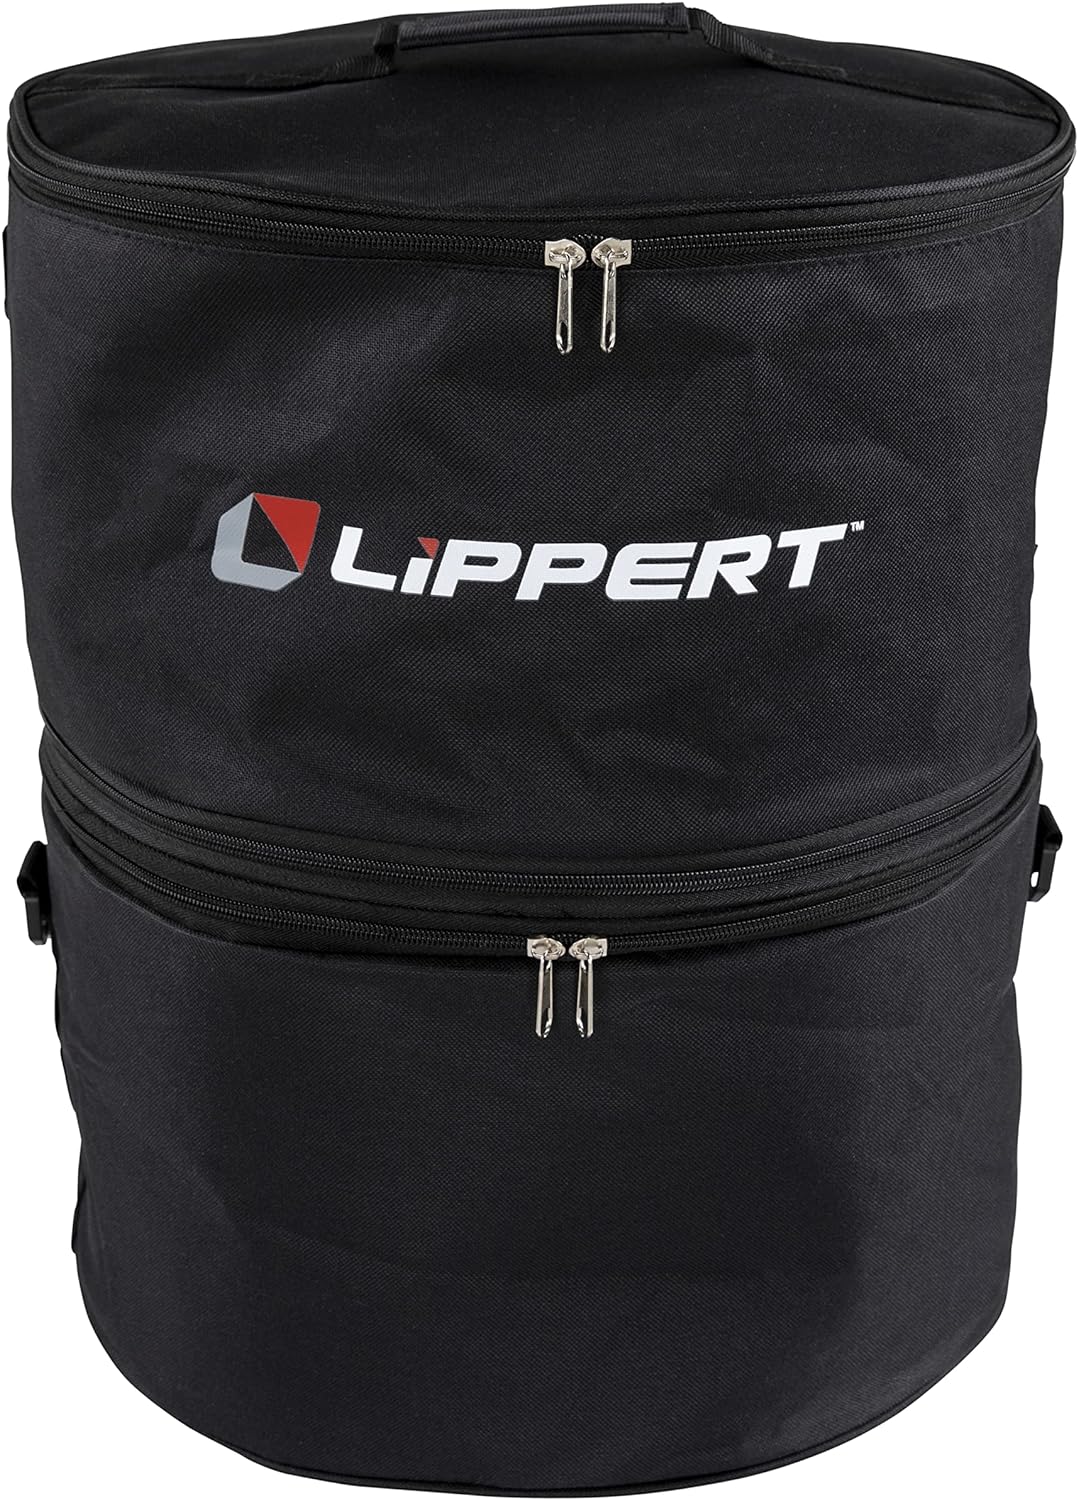 Lippert Odyssey Lightweight Portable Charcoal Grill, Amber